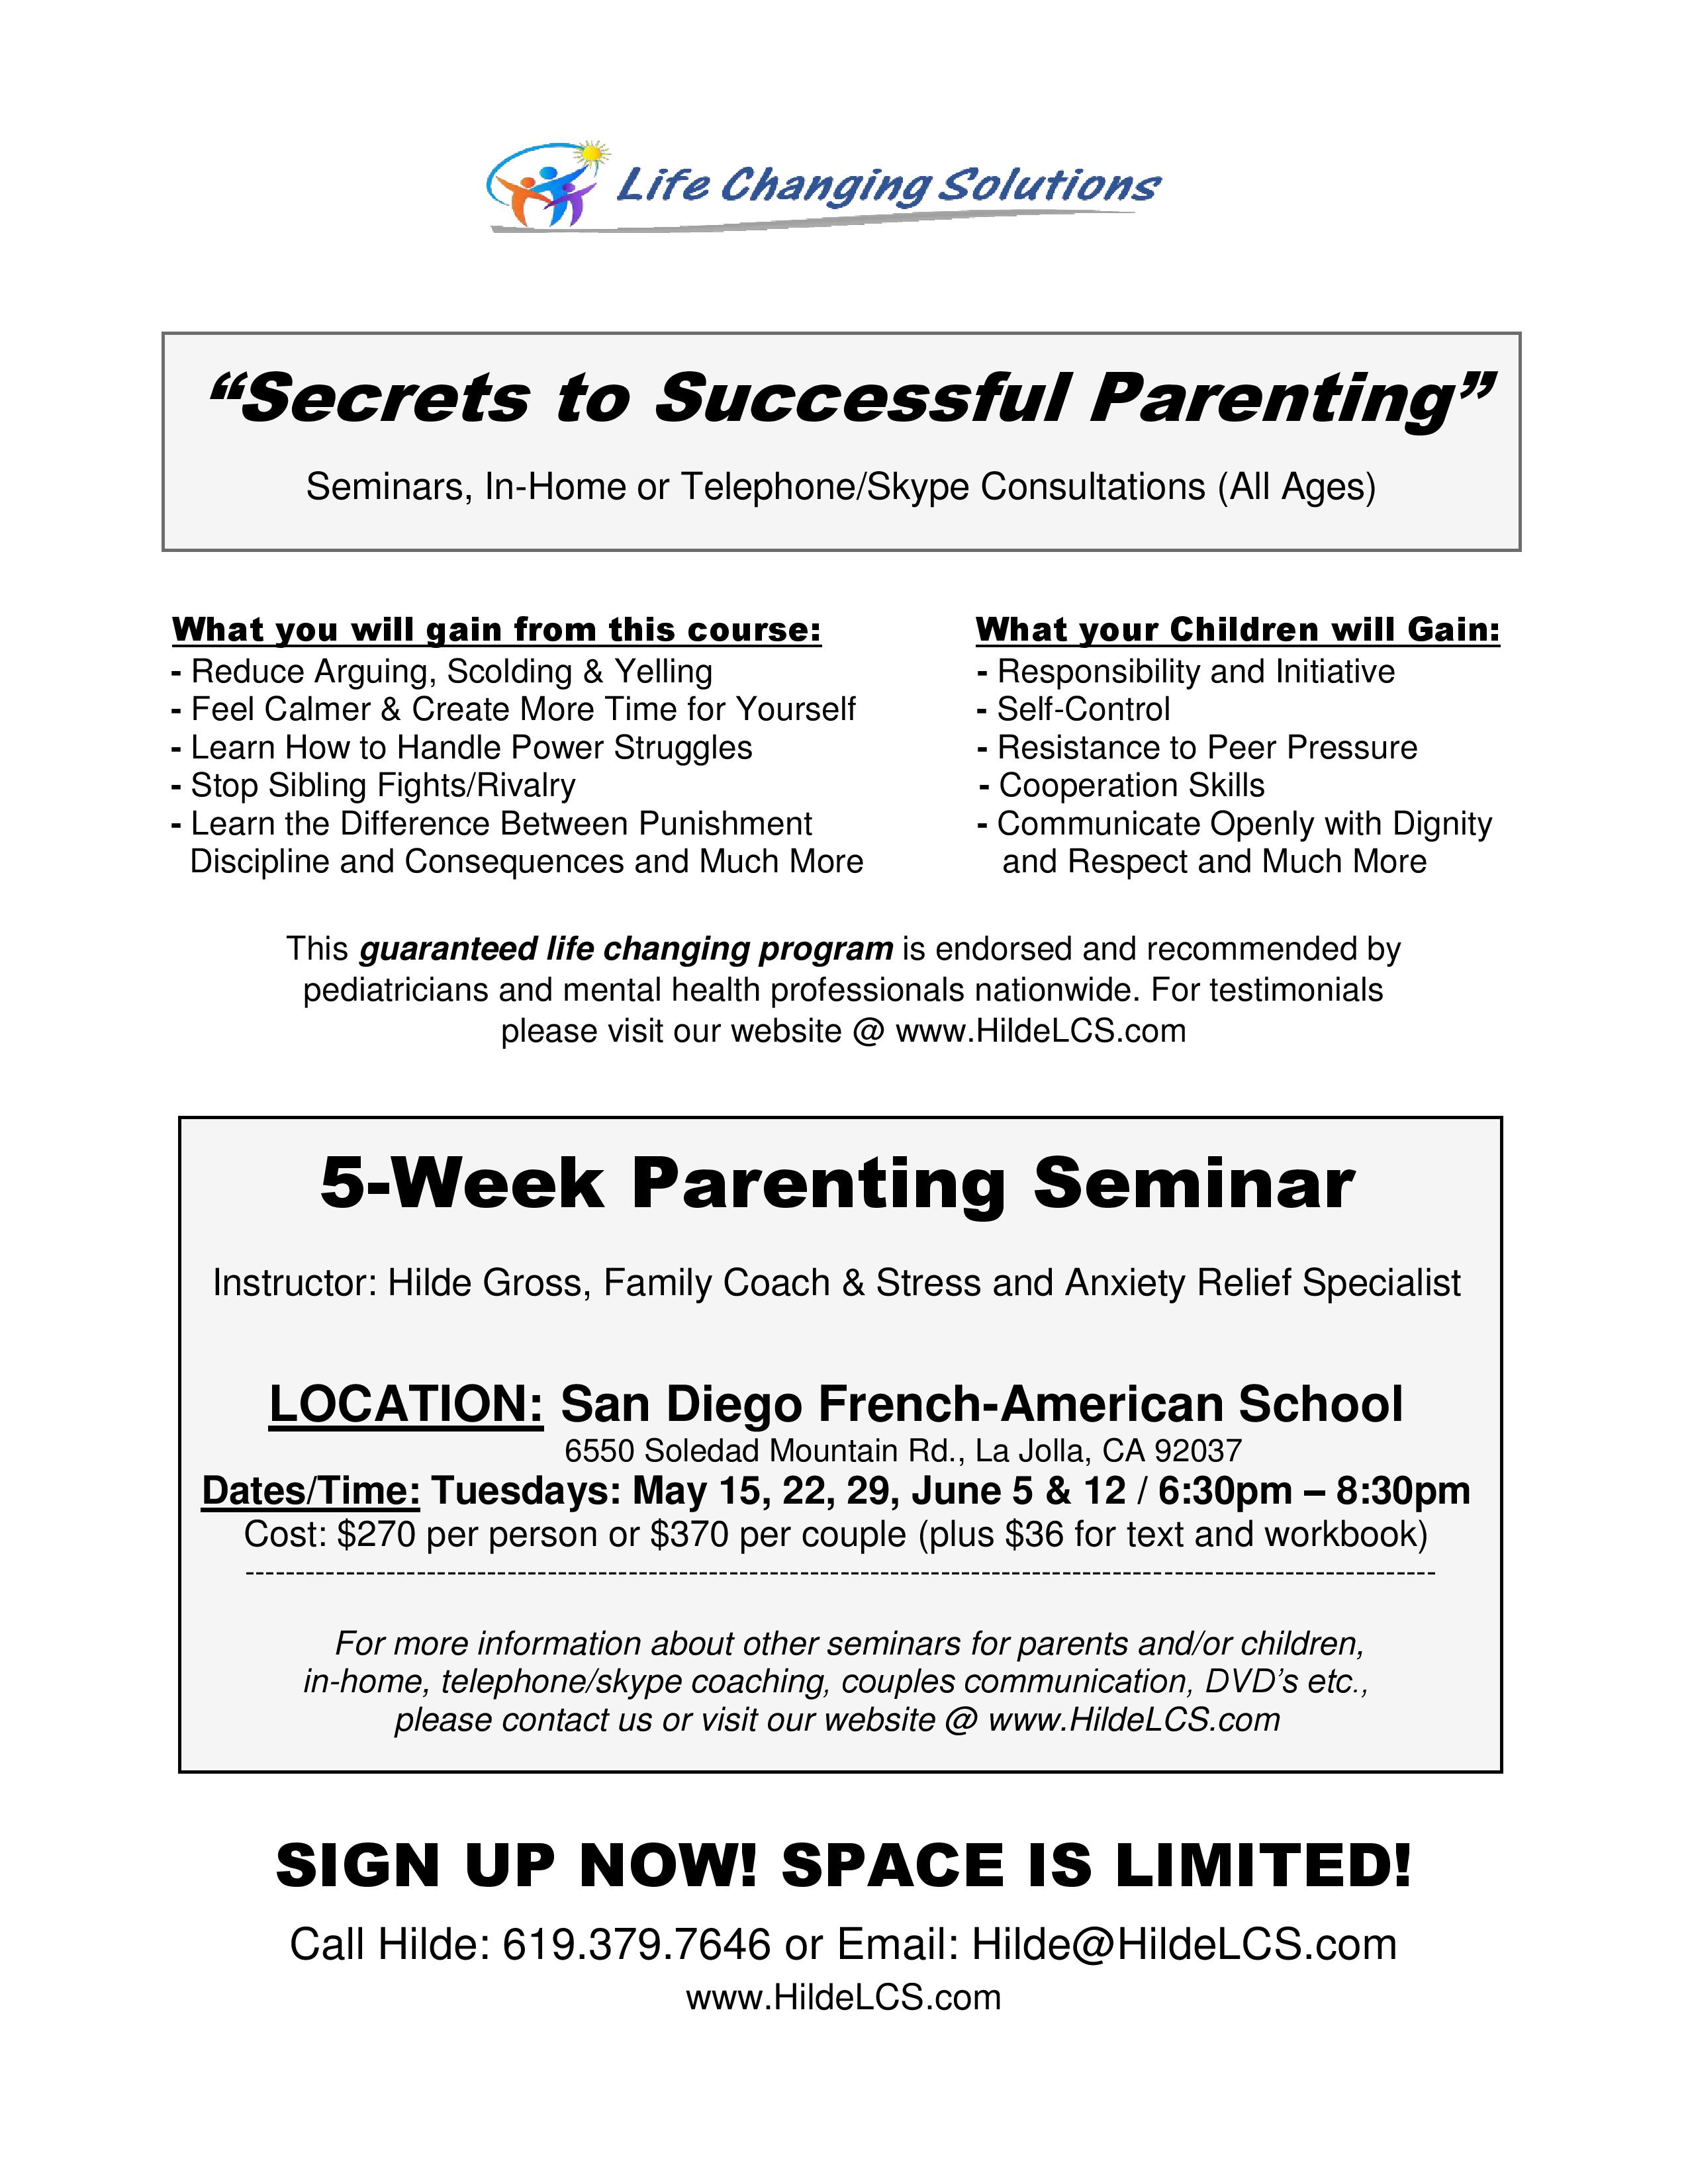 Secrets to Successful Parenting
5-Week Evening Seminar